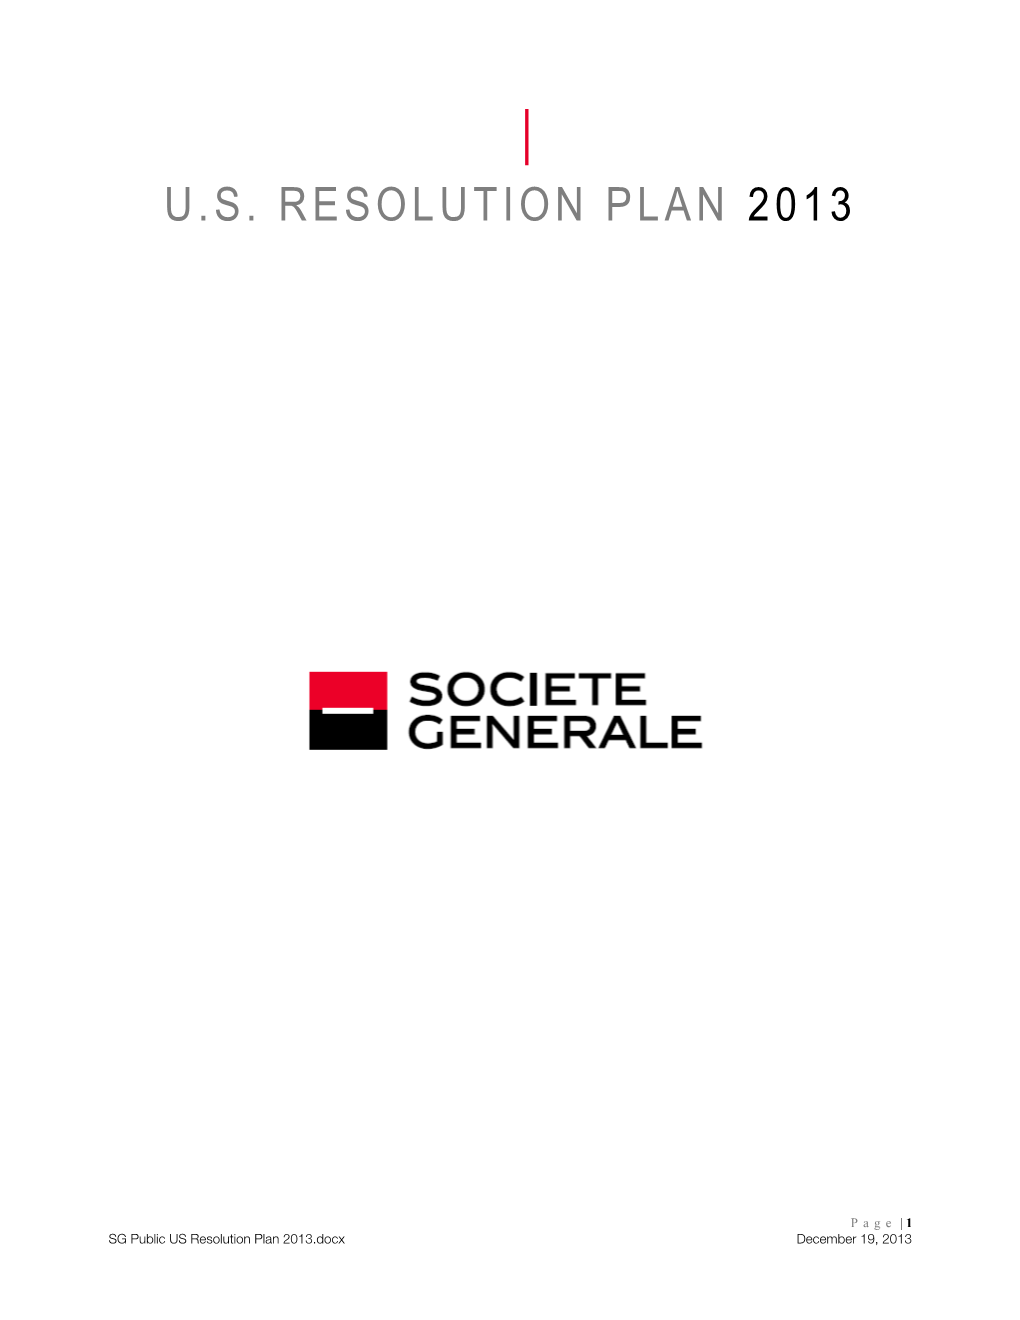 Societe Generale - 2013